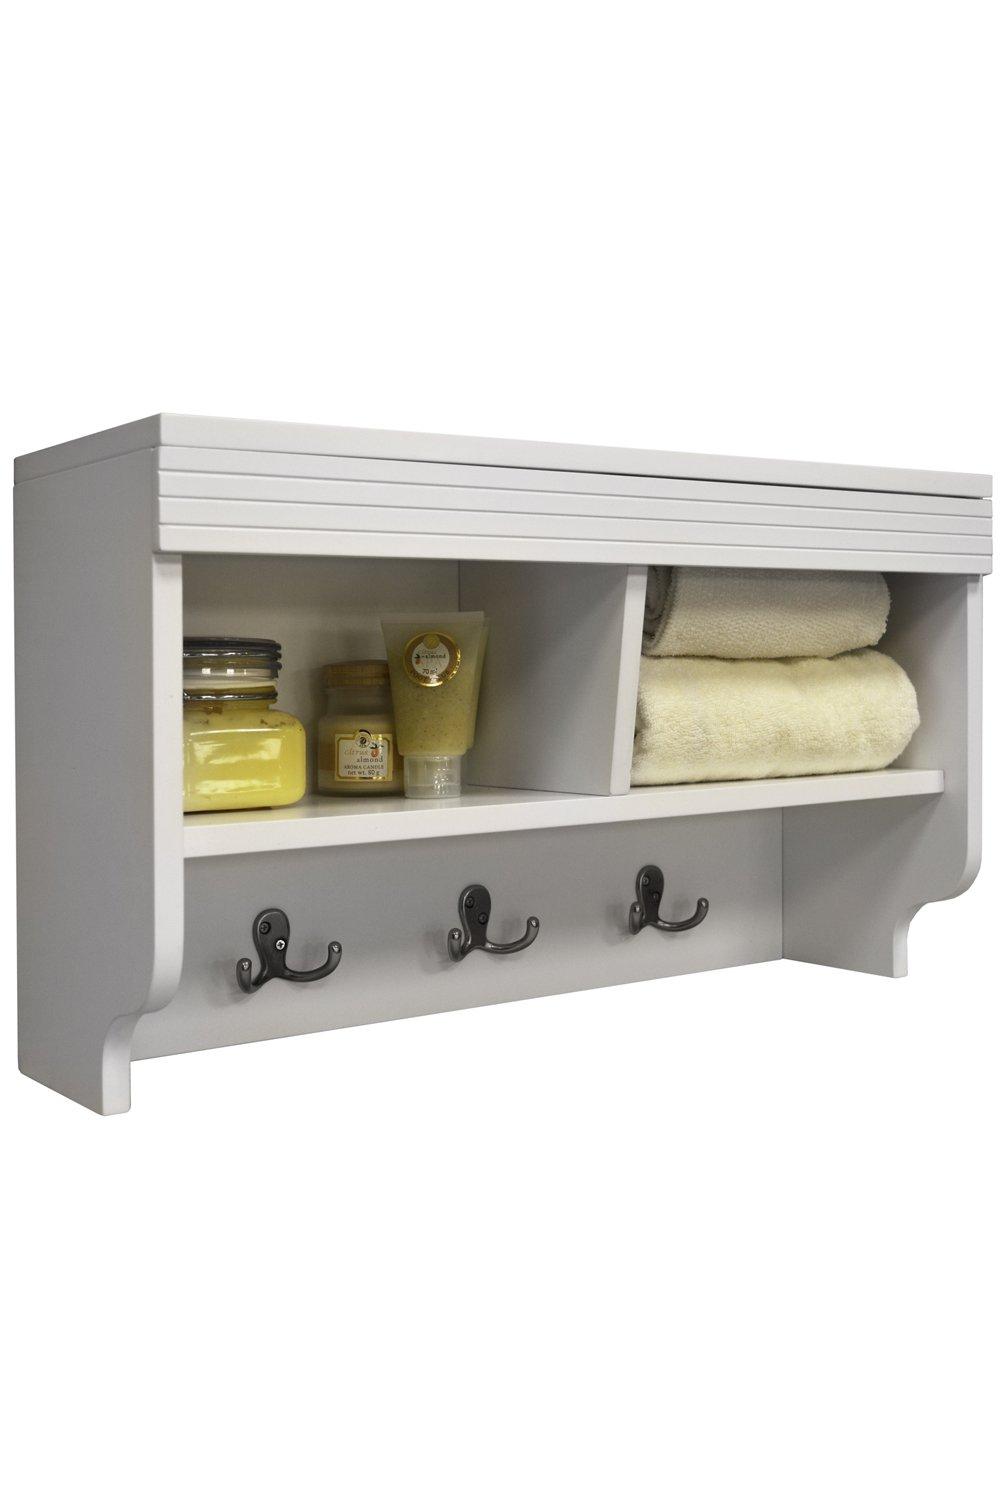 Cornice Coat Hook Shelf Storage Unit by Debenhams